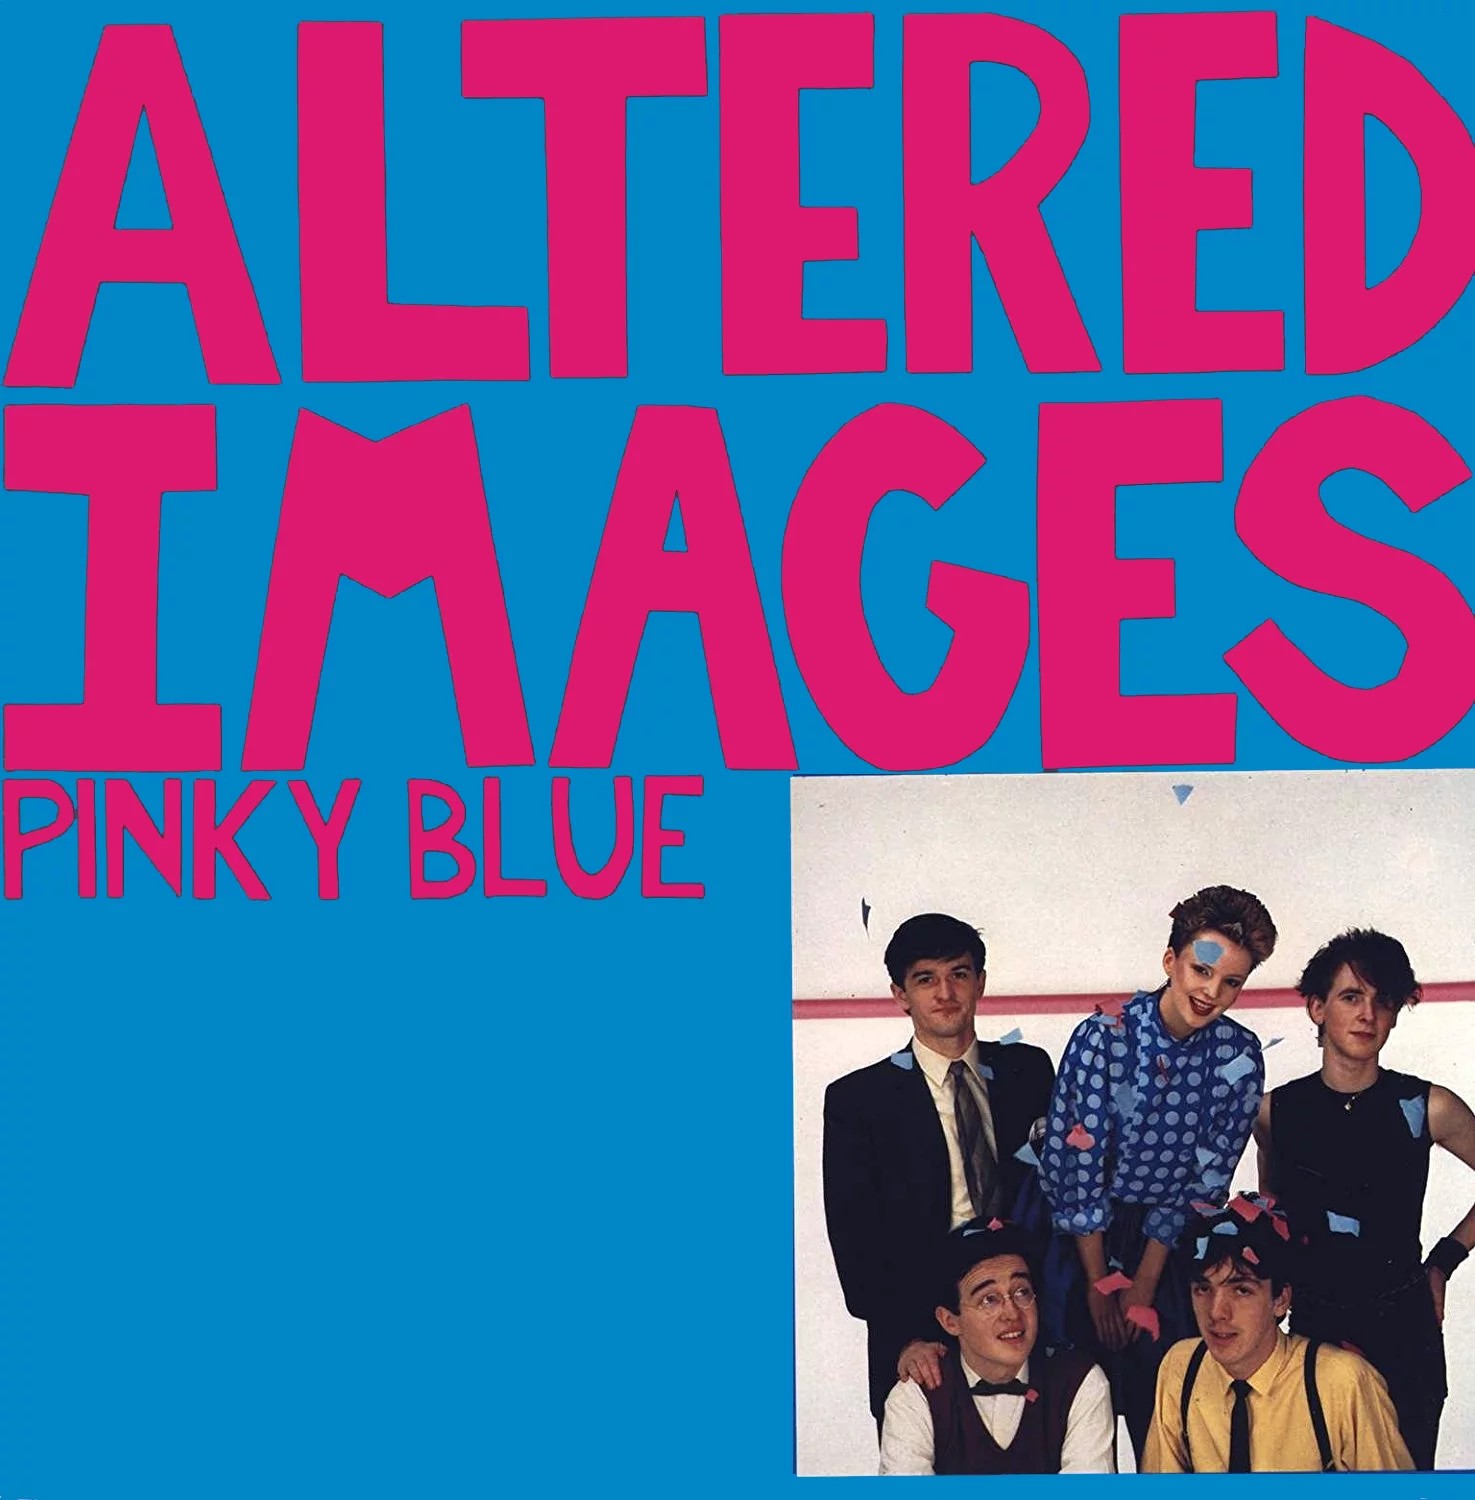 Altered Images ‘Pinky Blue’ album artwork